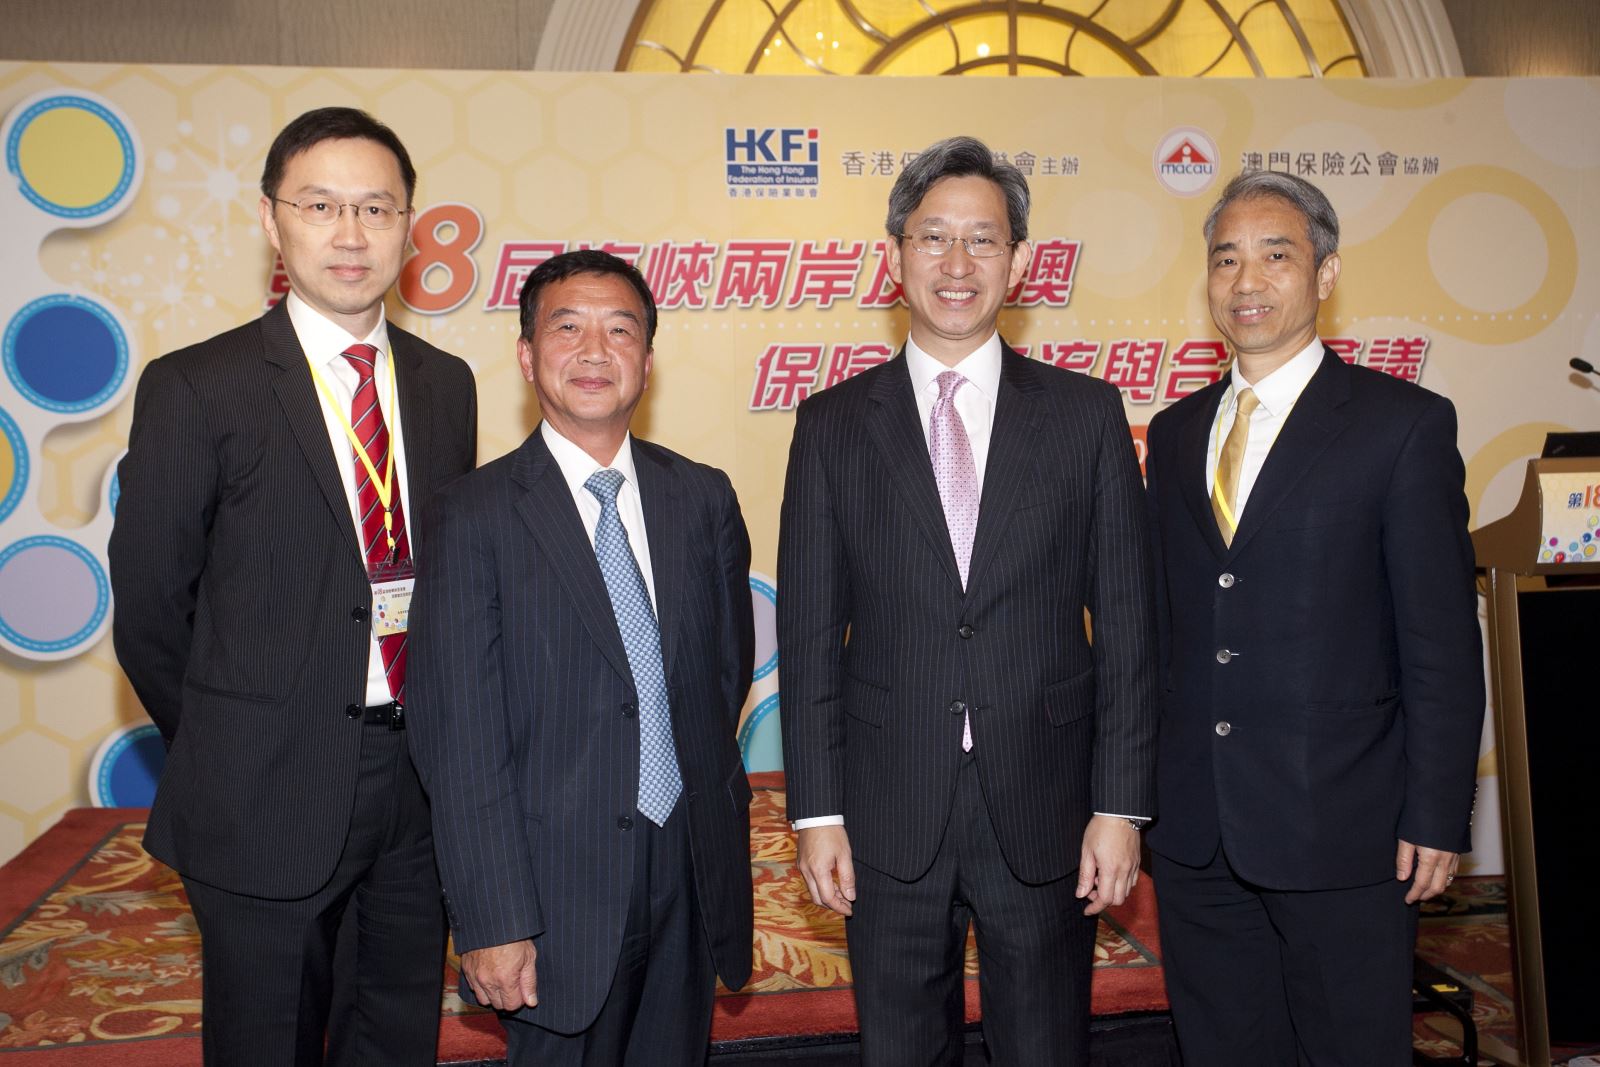 18th Cross-strait, Hong Kong & Macau Insurance Business Conference - Life Insurance Session